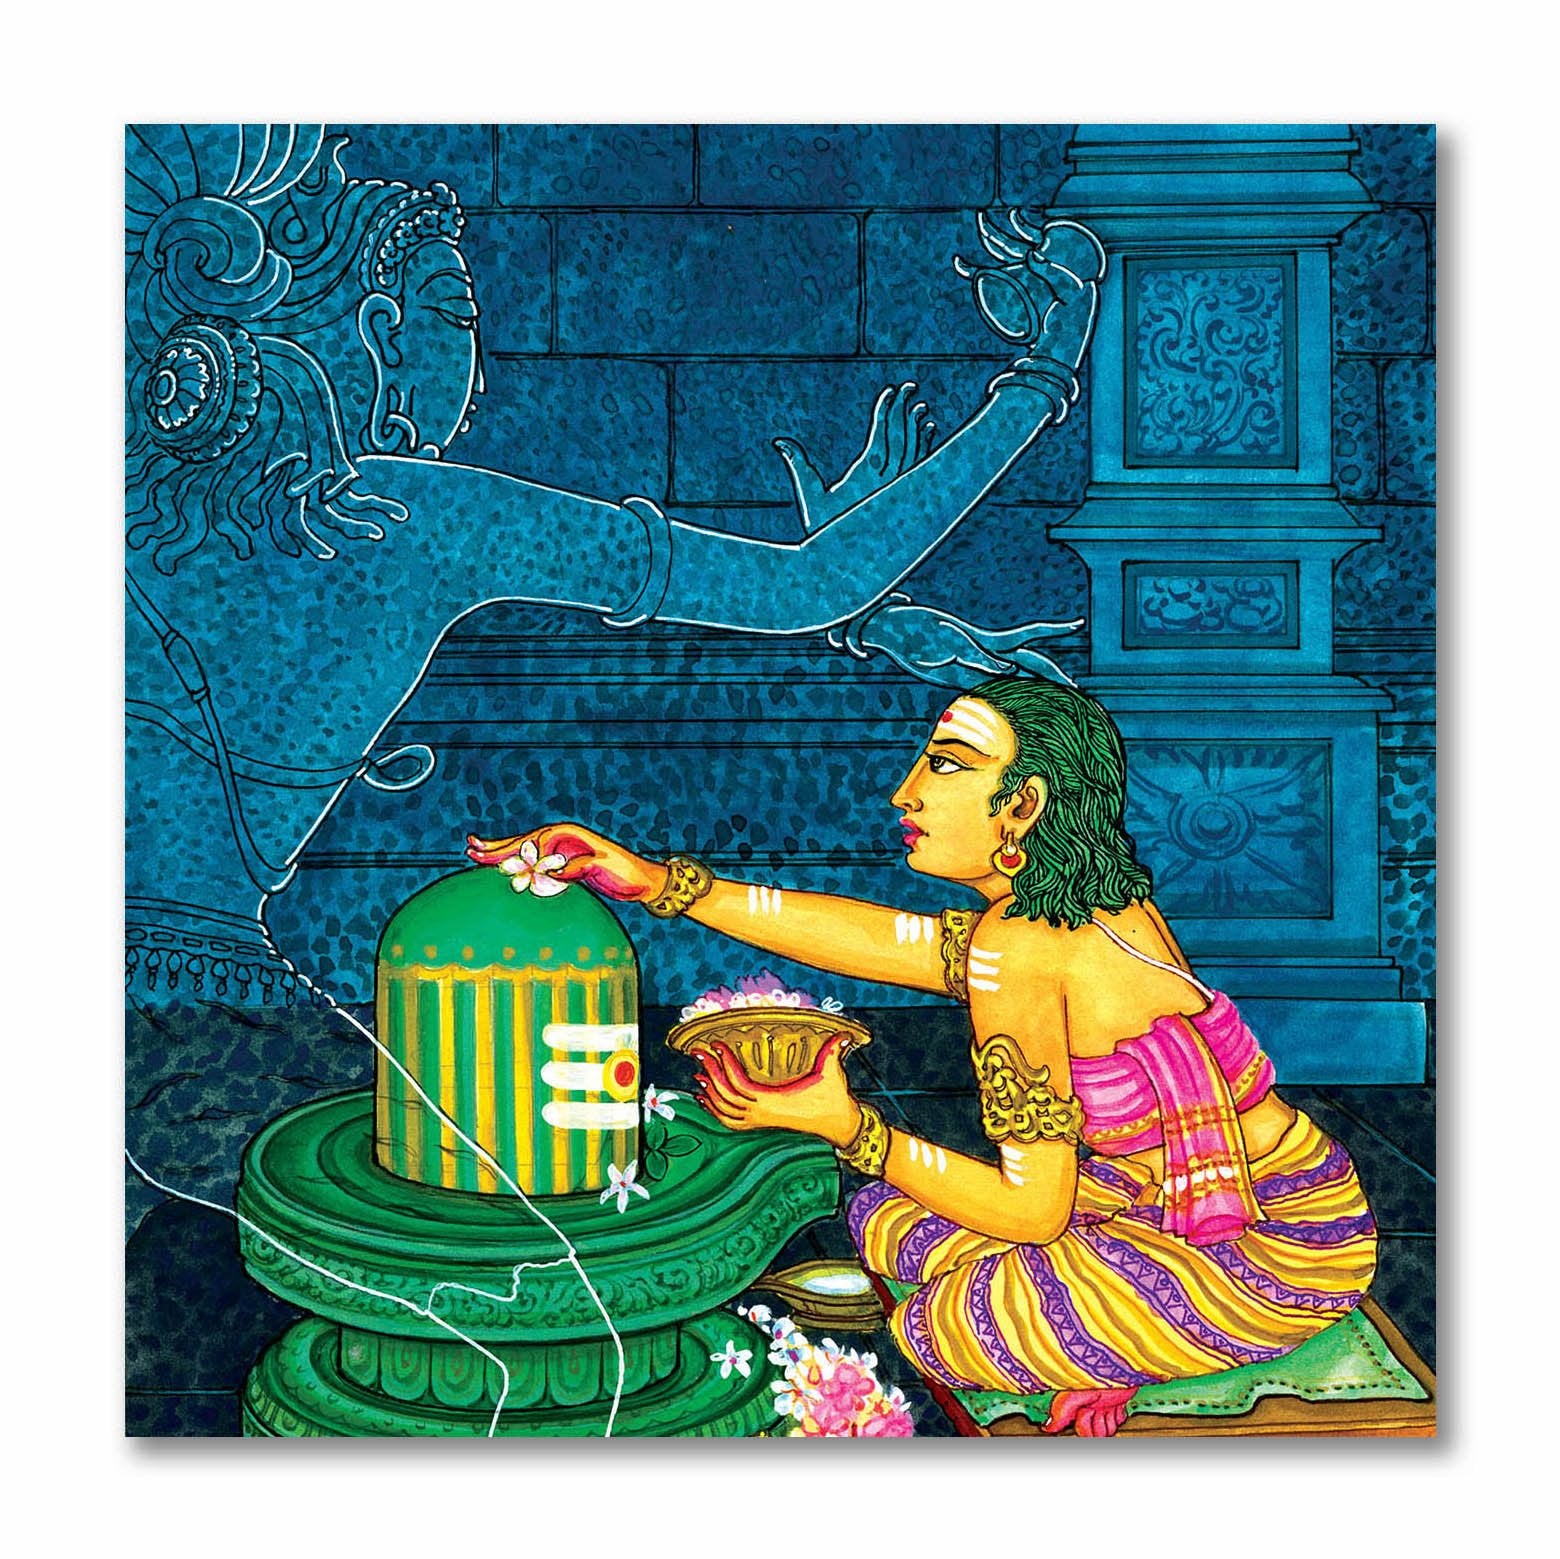 Mahamaya Goddess Durga, The great illusion or affection